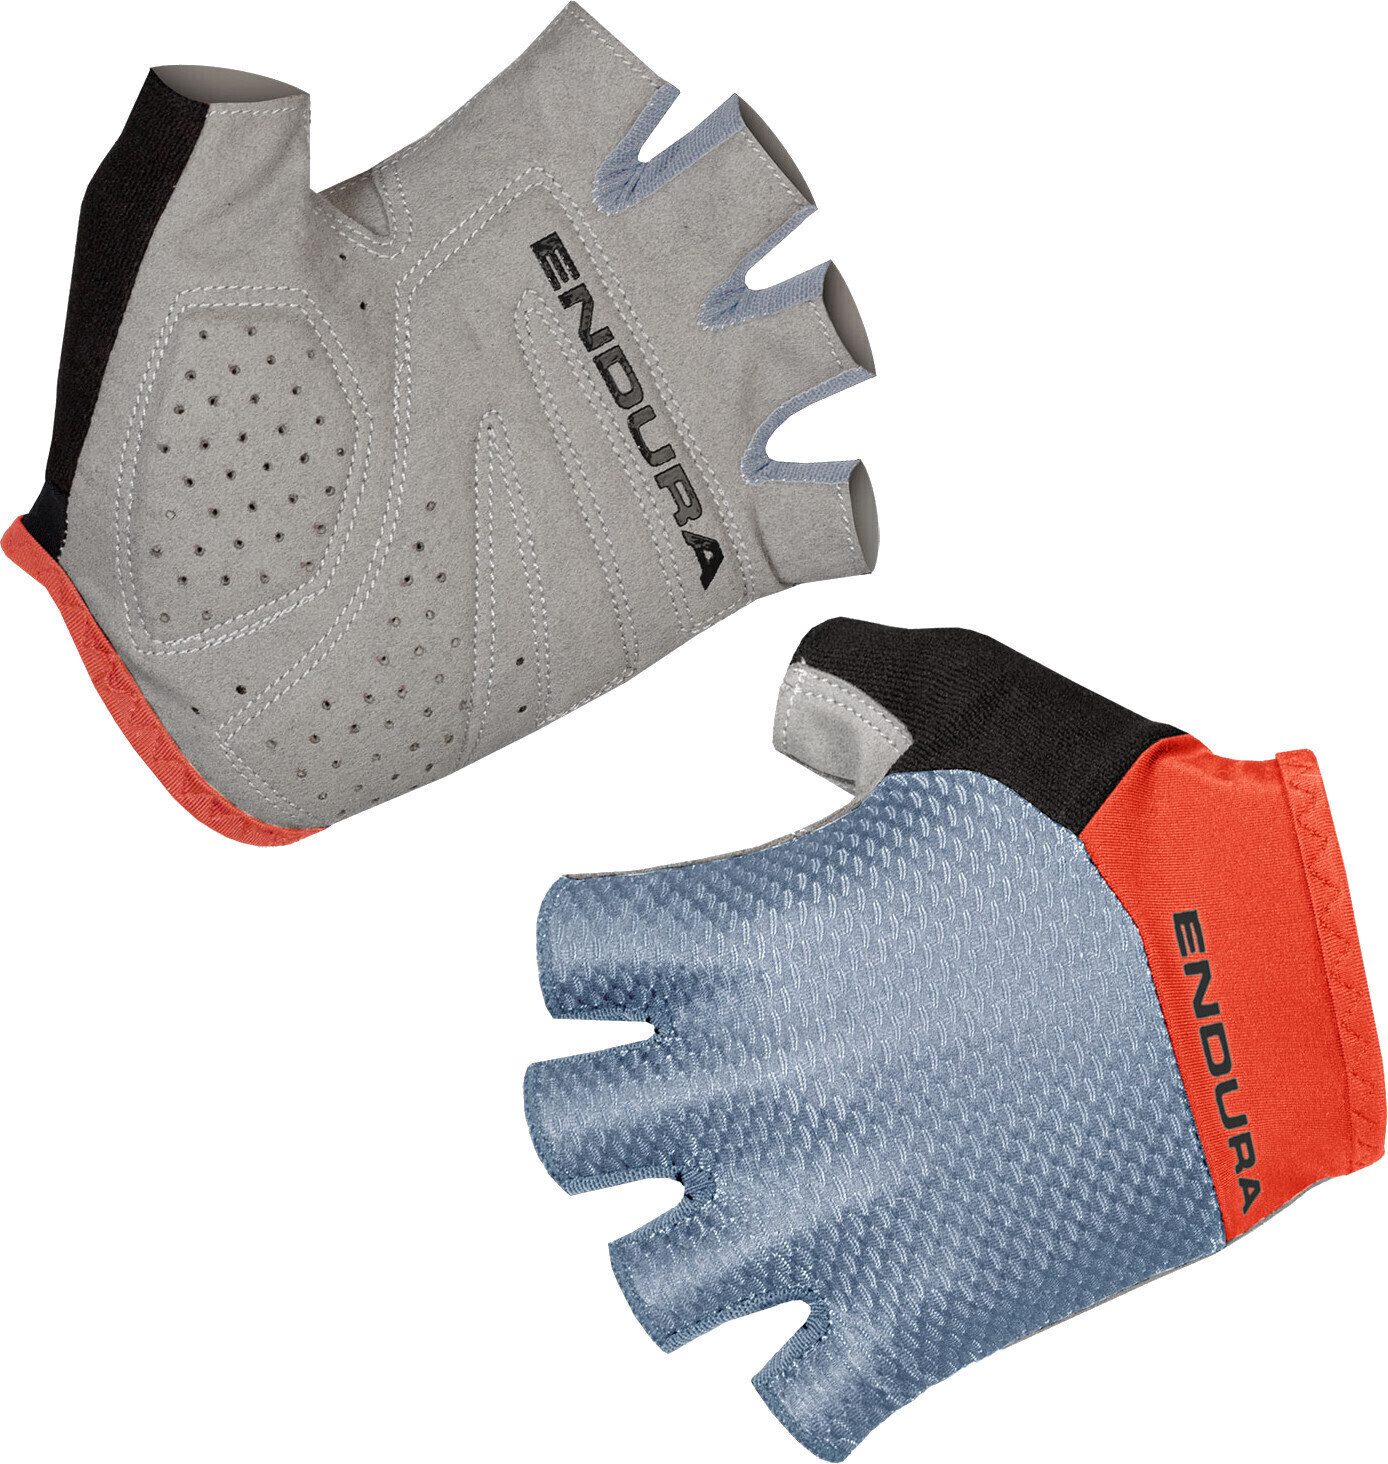 Buy Endura Xtract Lite Gloves Men's white from £17.49 (Today) – Best